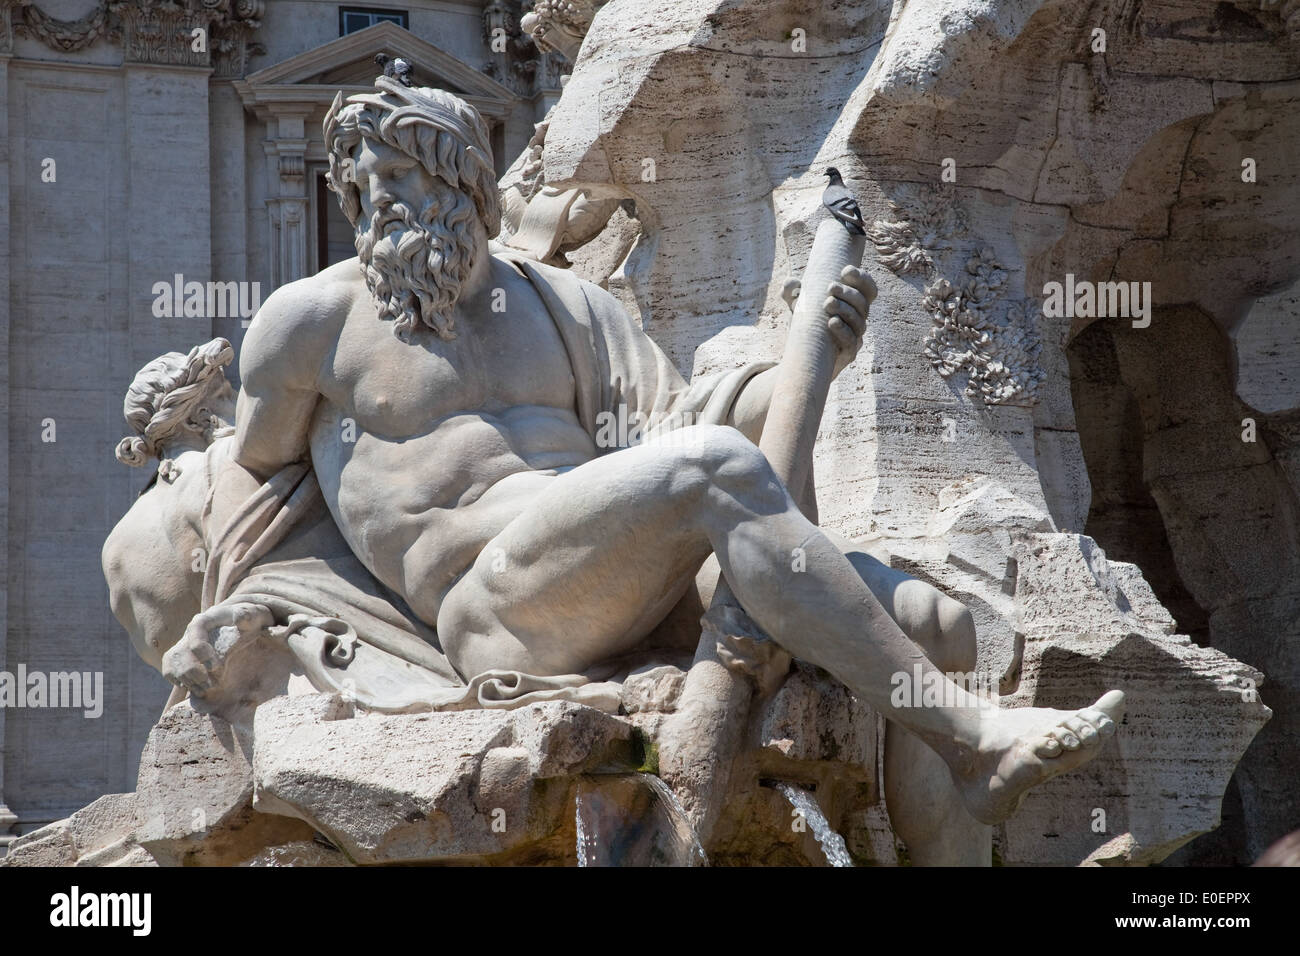 Fontana dei Quattro Fiumi, Rom, Italie - Fontana dei Quattro Fiumi, Rome, Italie Banque D'Images